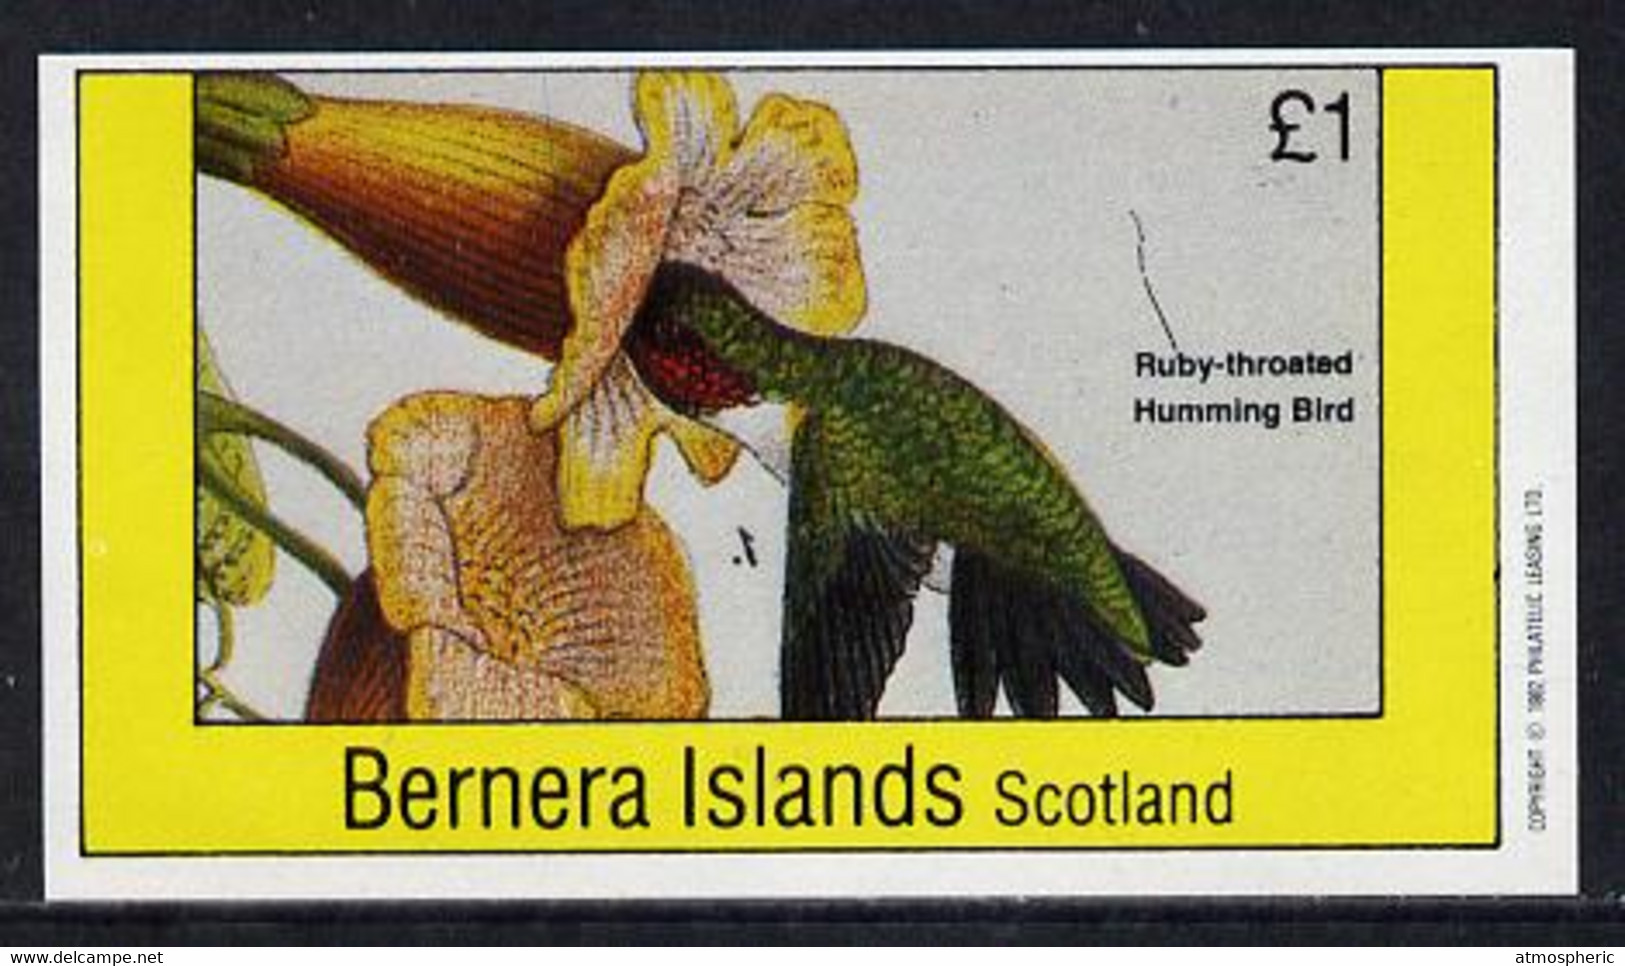 Bernera 1982 Humming Bird Imperf Souvenir Sheet (£1 Value) U/M - Unclassified